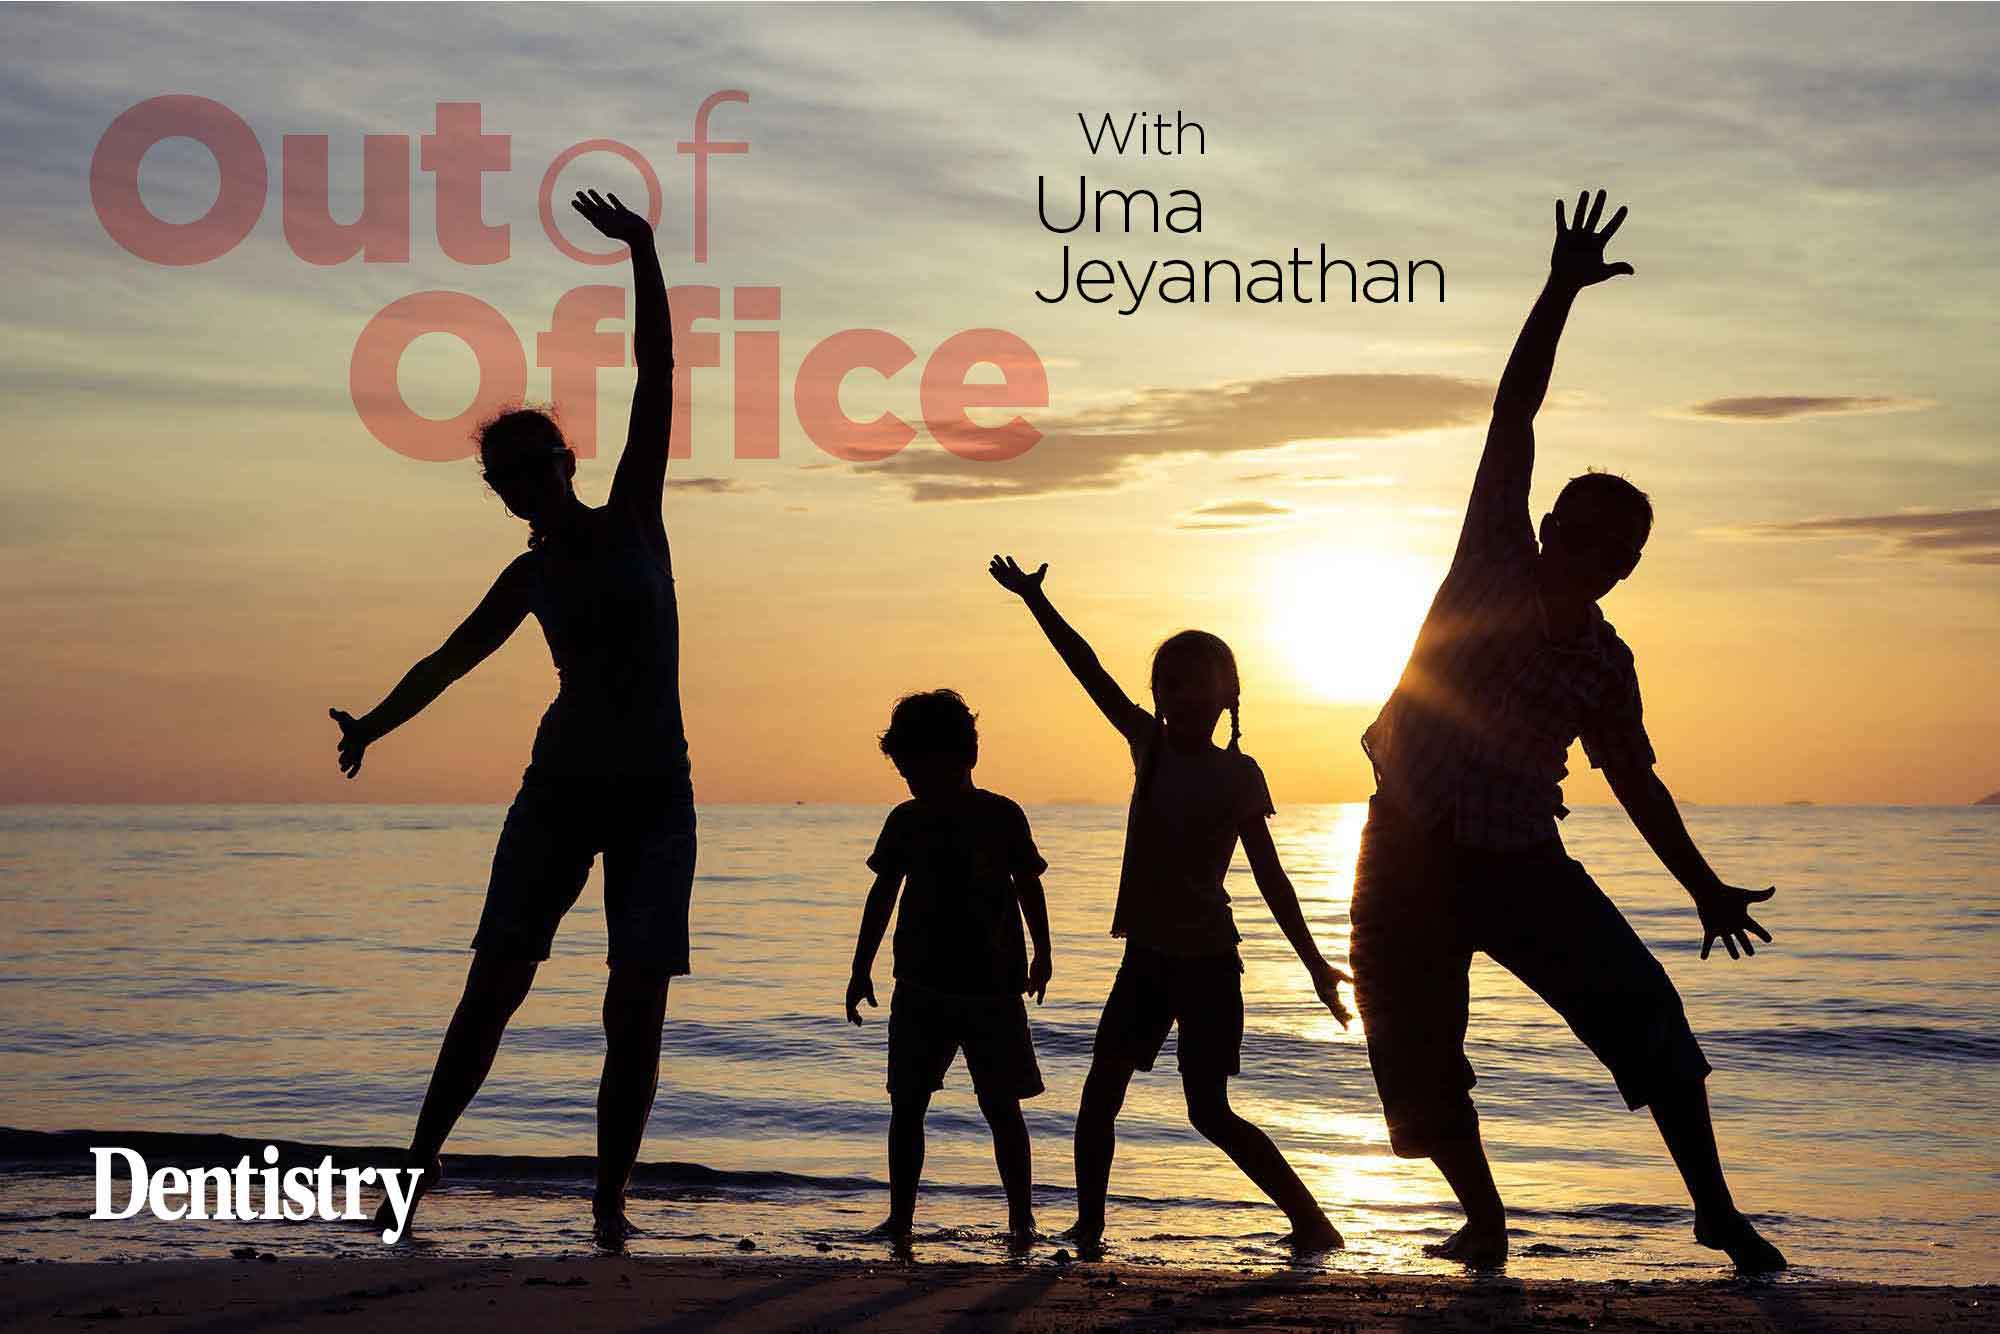 uma jeyanathan on family work balance